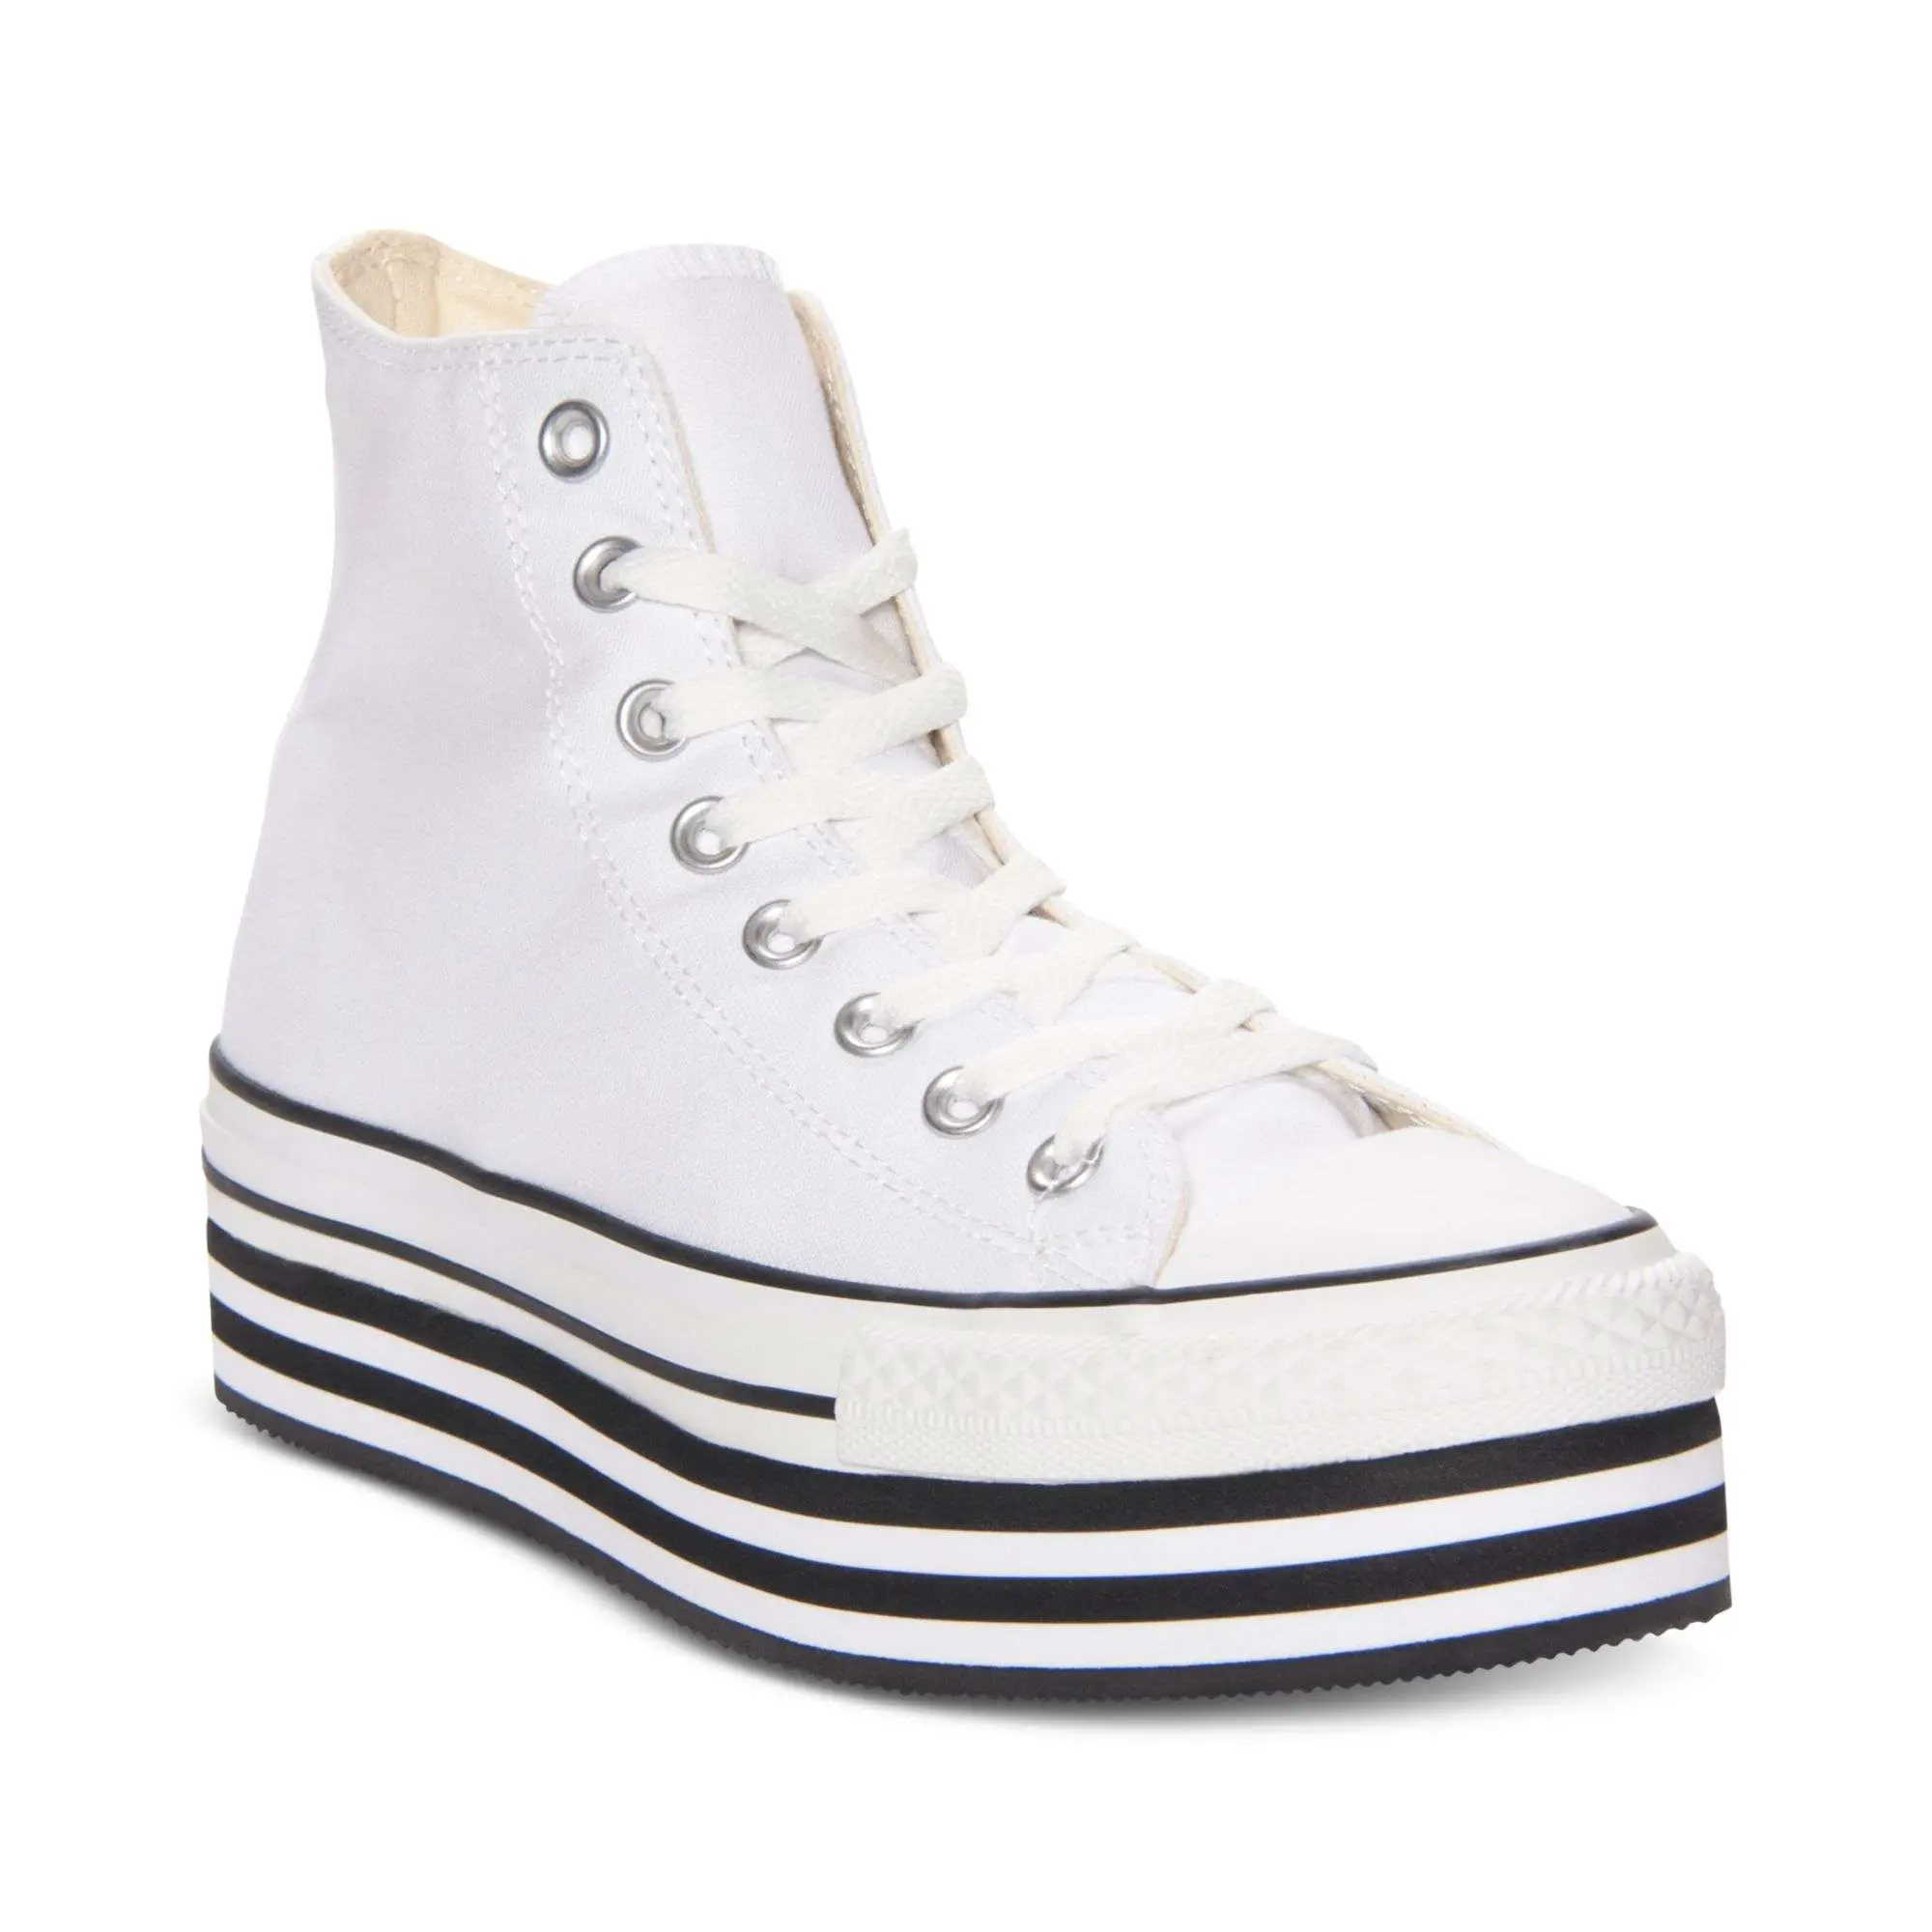 Converse Chuck Taylor Platform Eva Hi Casual Sneakers in White